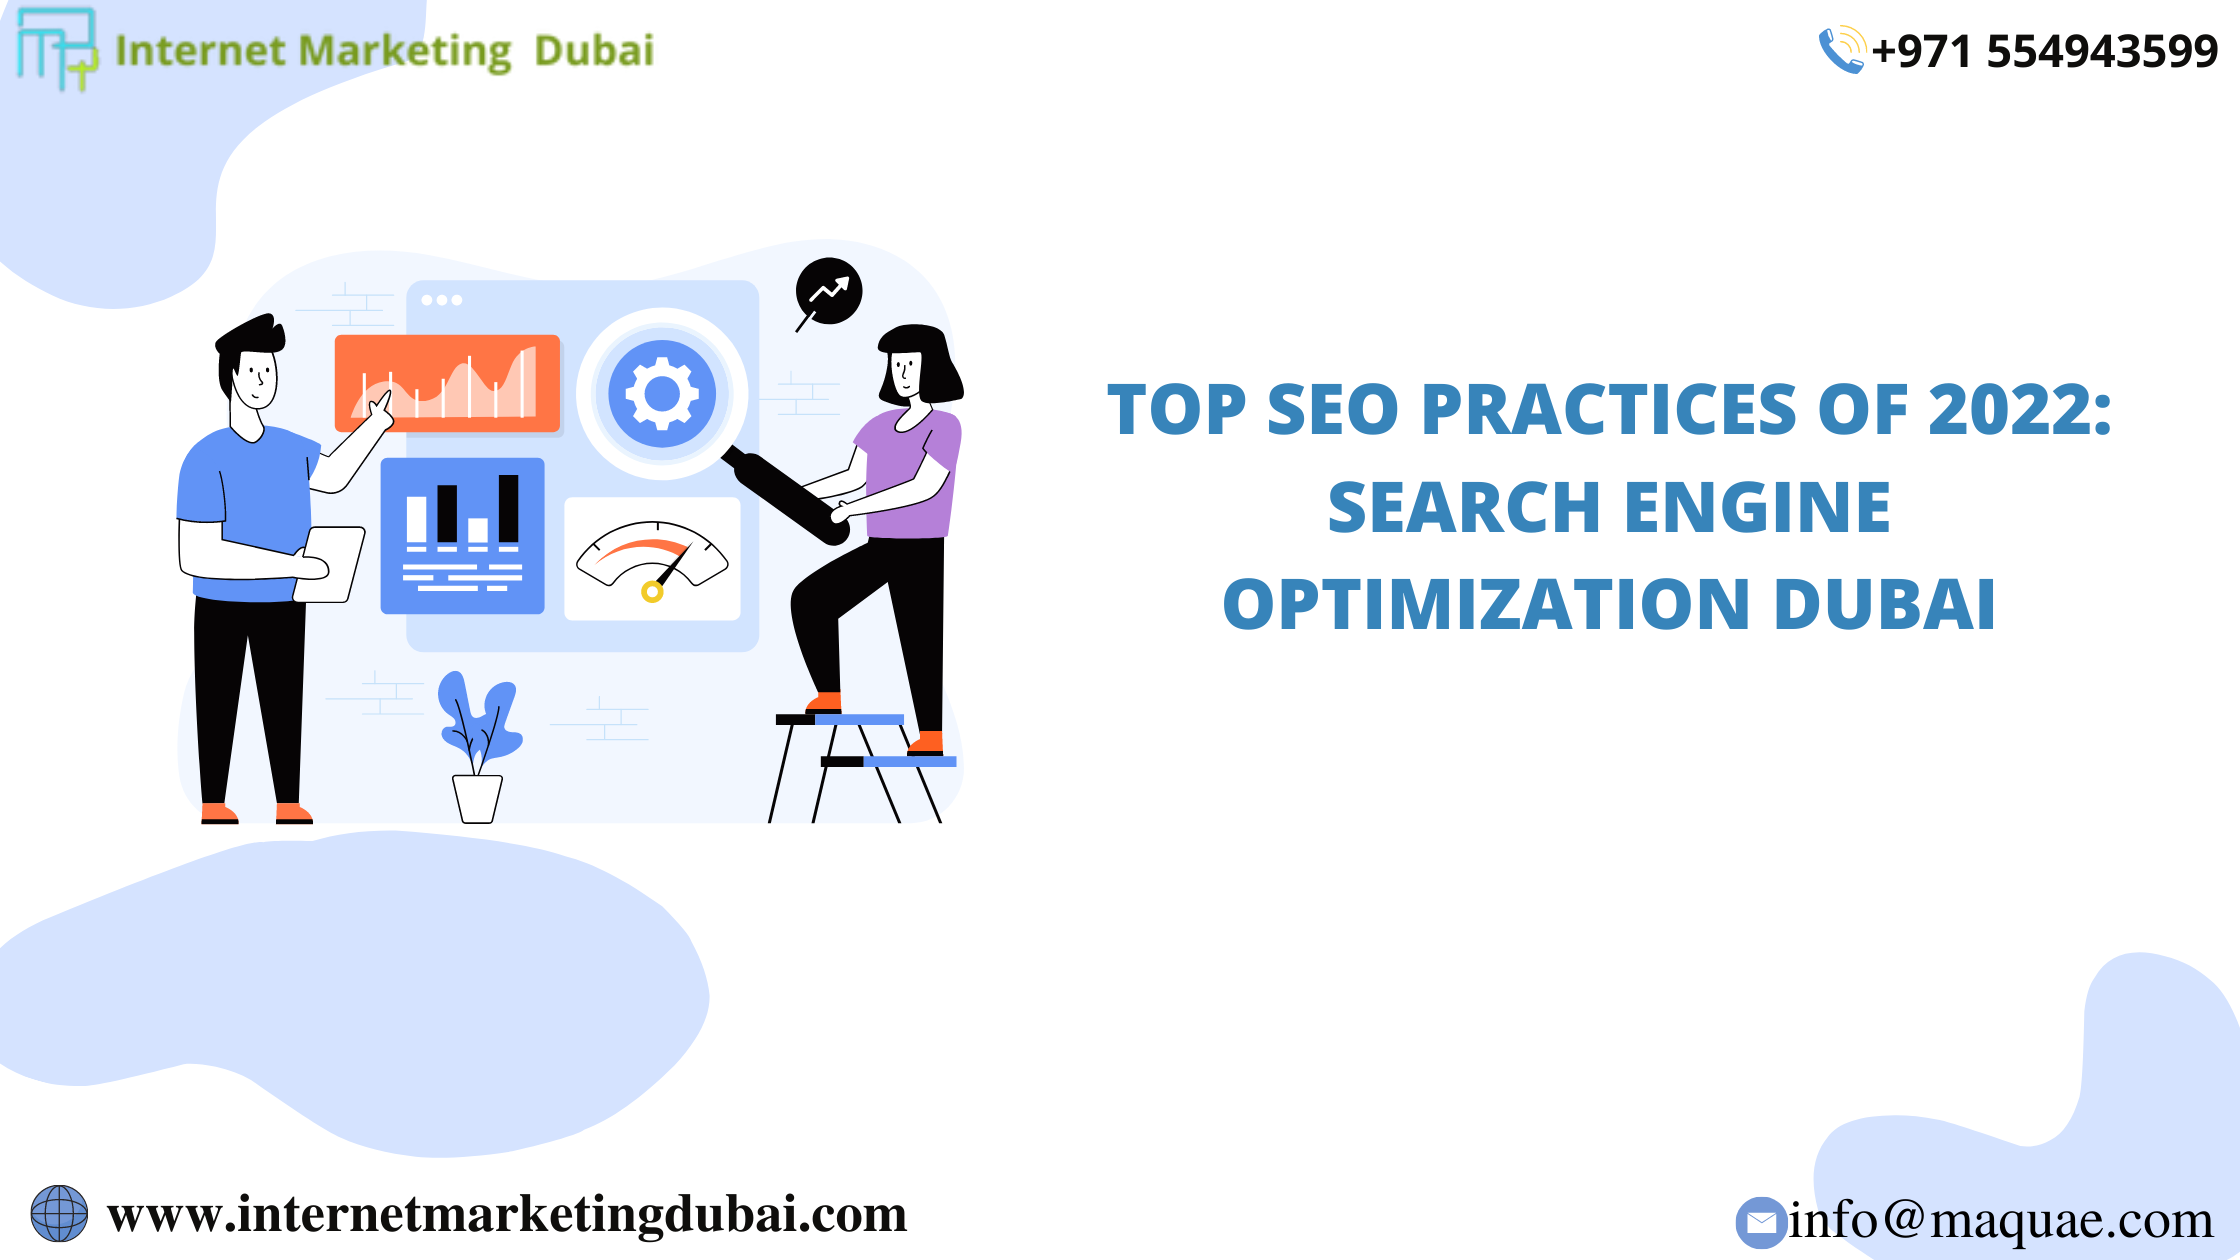 Top SEO Practices Of 2022 Search Engine Optimization Dubai